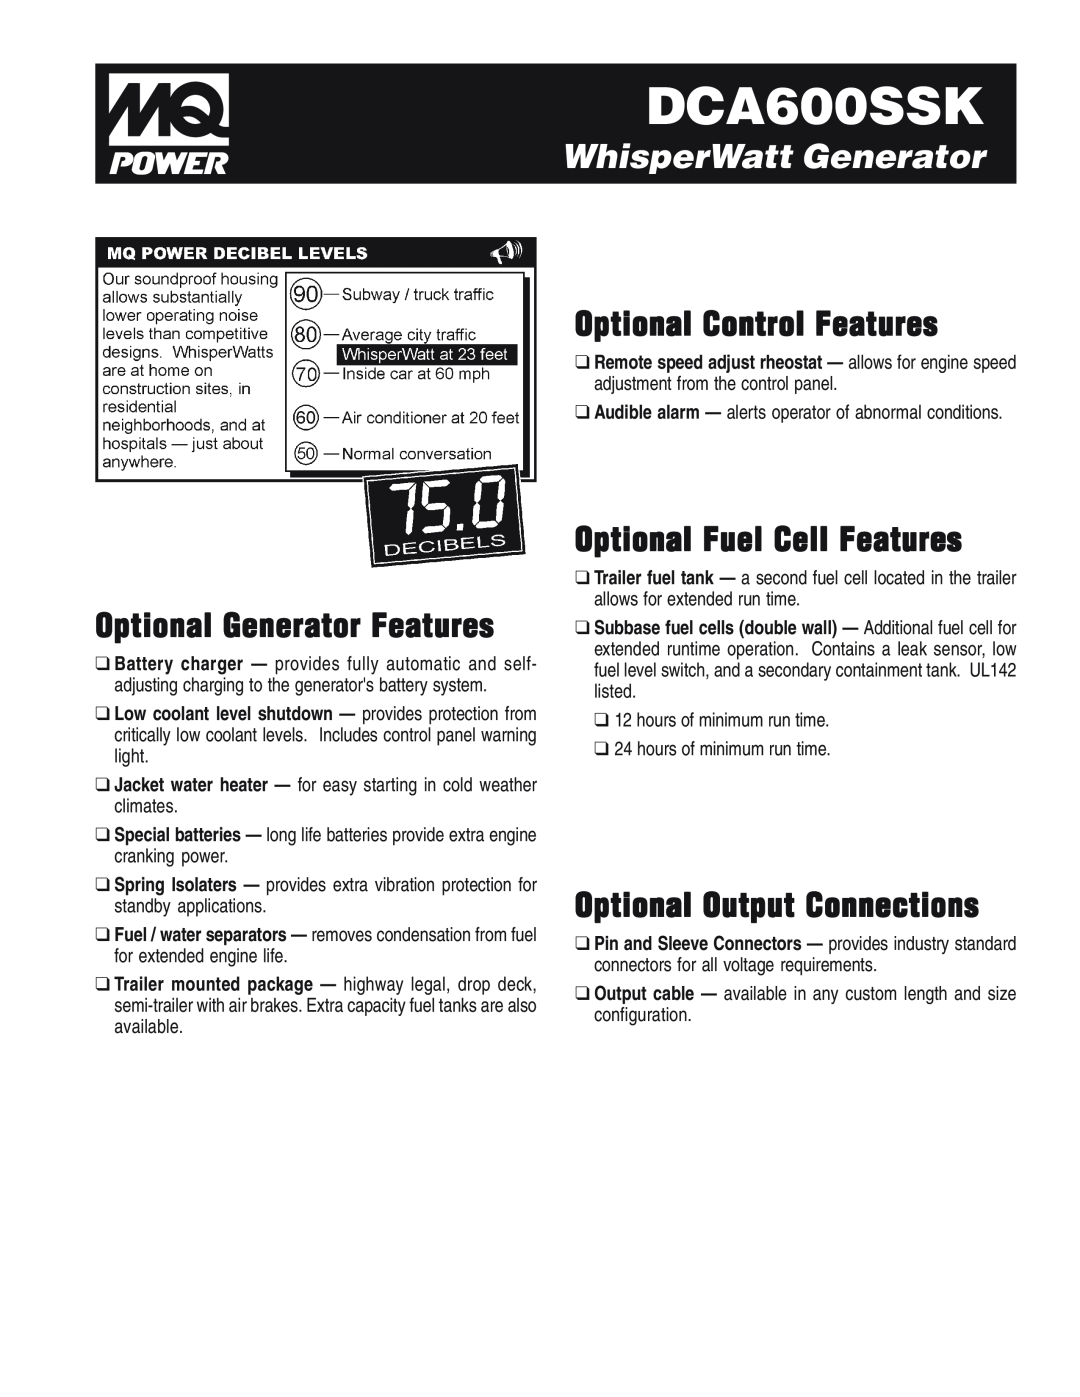 Multiquip DCA600SSK manual Optional Generator Features, Optional Control Features, Optional Fuel Cell Features 